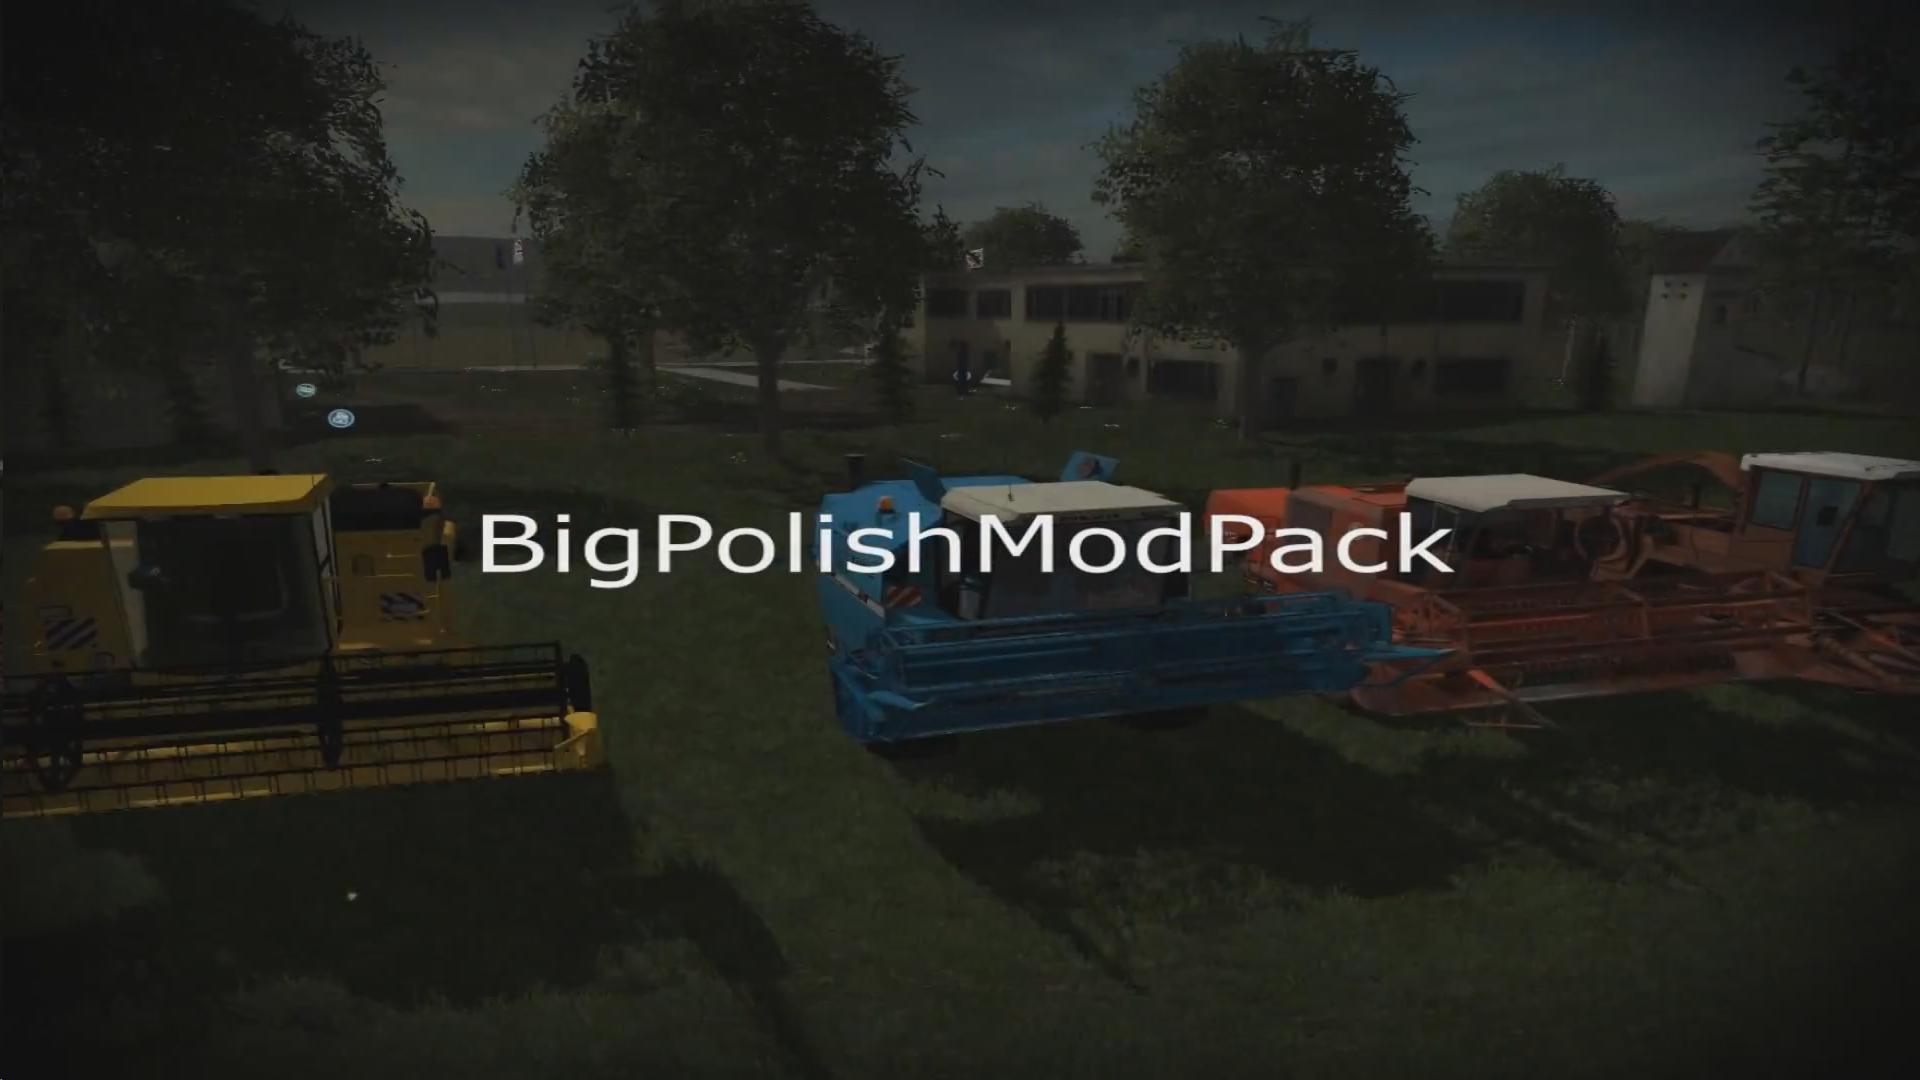 Big Polish Mod Pack By Kitaa • Farming Simulator 19 17 22 Mods Fs19 17 22 Mods 4371